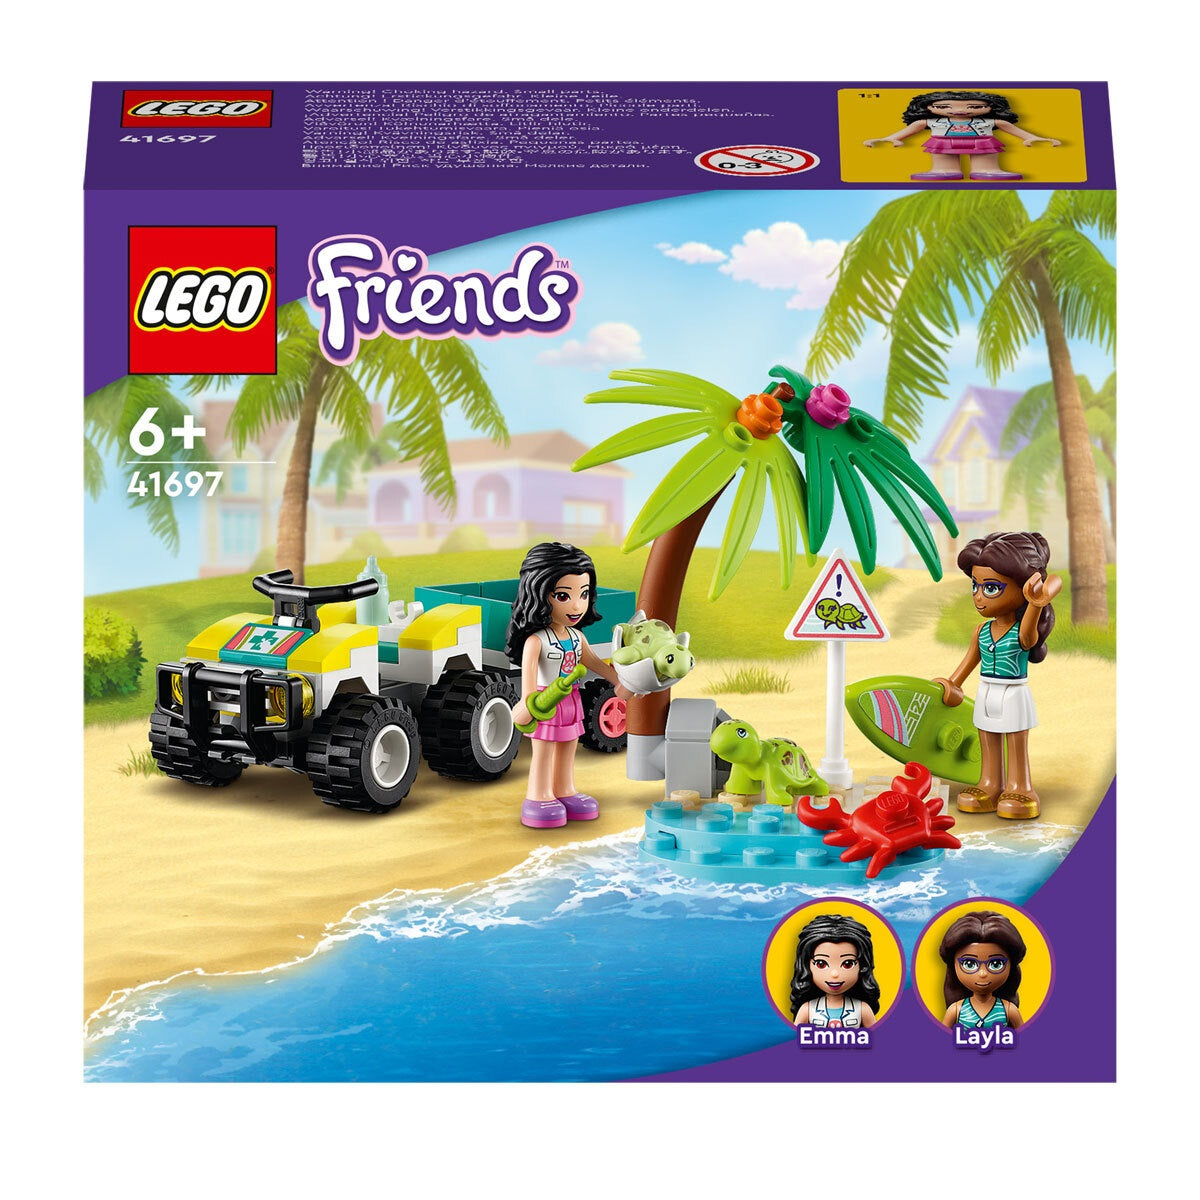 LEGO Friends Turtle Protection ATV - 41697